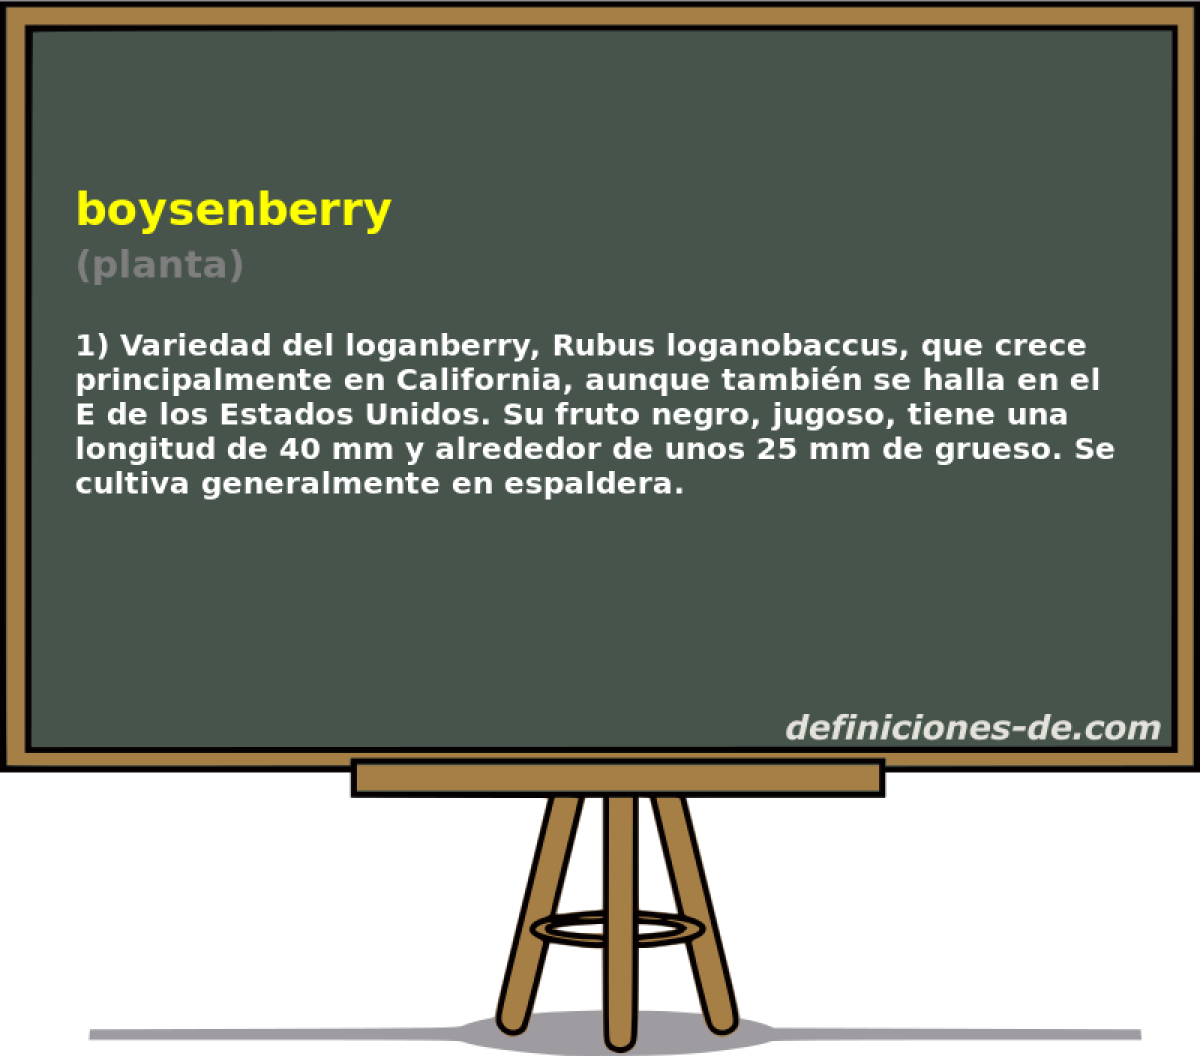 boysenberry (planta)